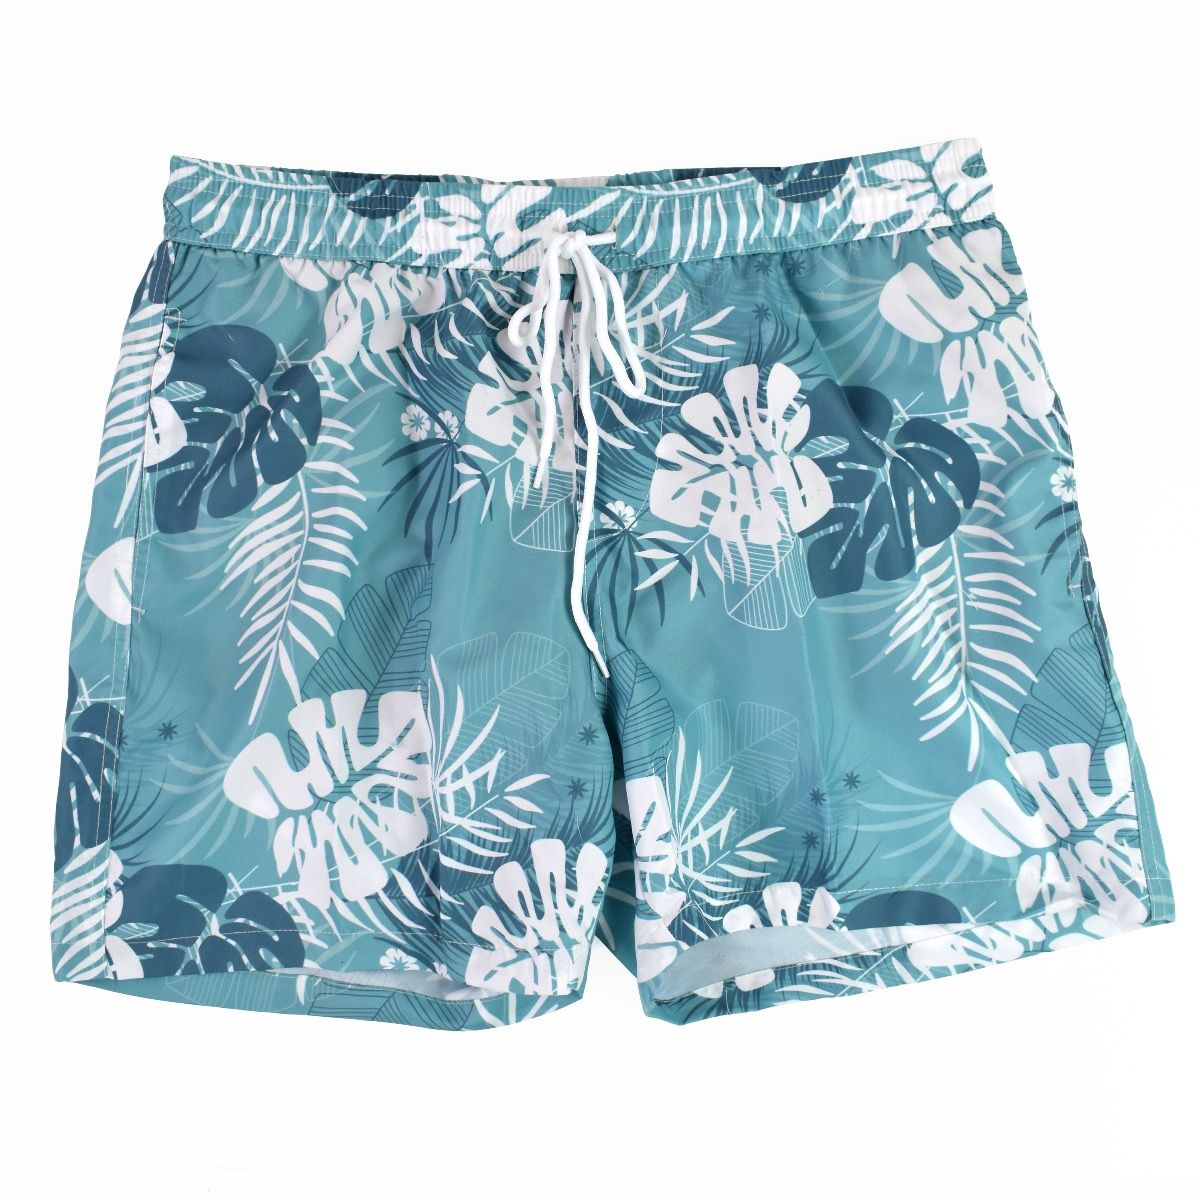 DEYYA Mens Kitty Seamless Pattern Summer Beach Shorts Pants Swim Trunks Board Short for Men